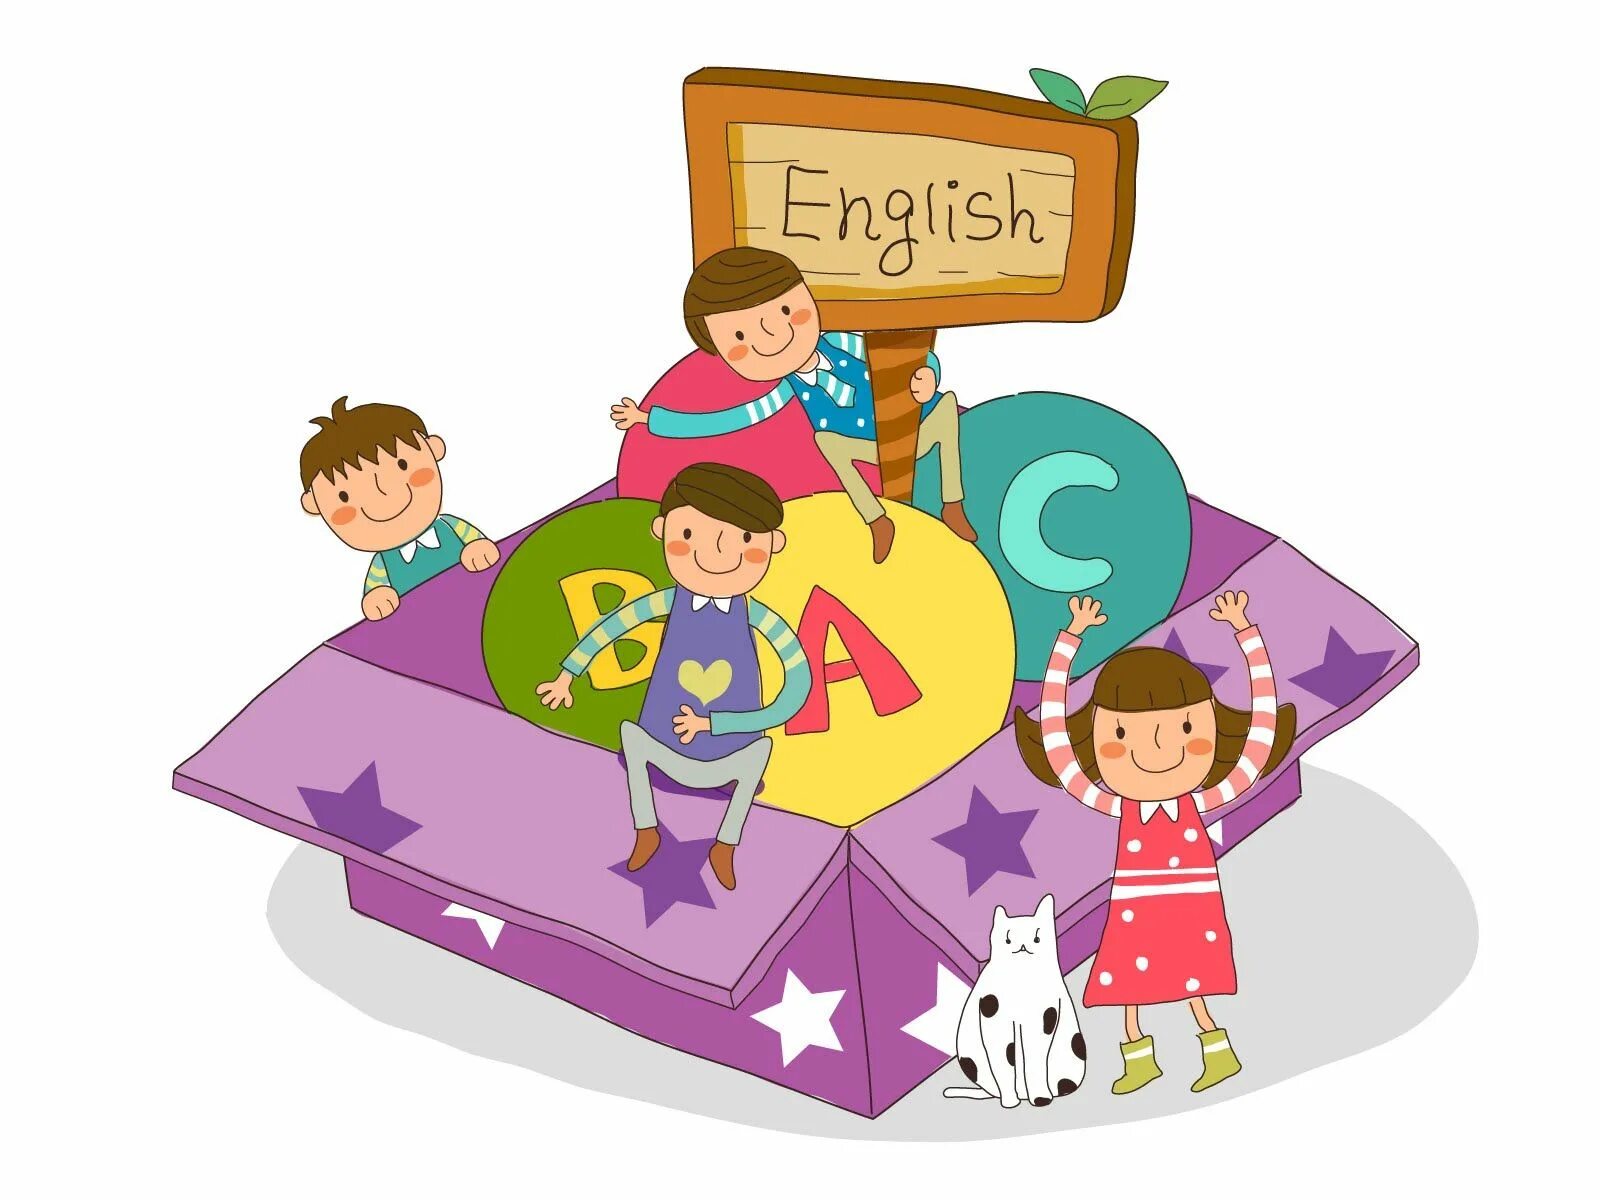 Subject subject an interesting subject. Английский для детей. Веселый английский для детей. Английский язык в картинках. Уроки английского языка для детей.